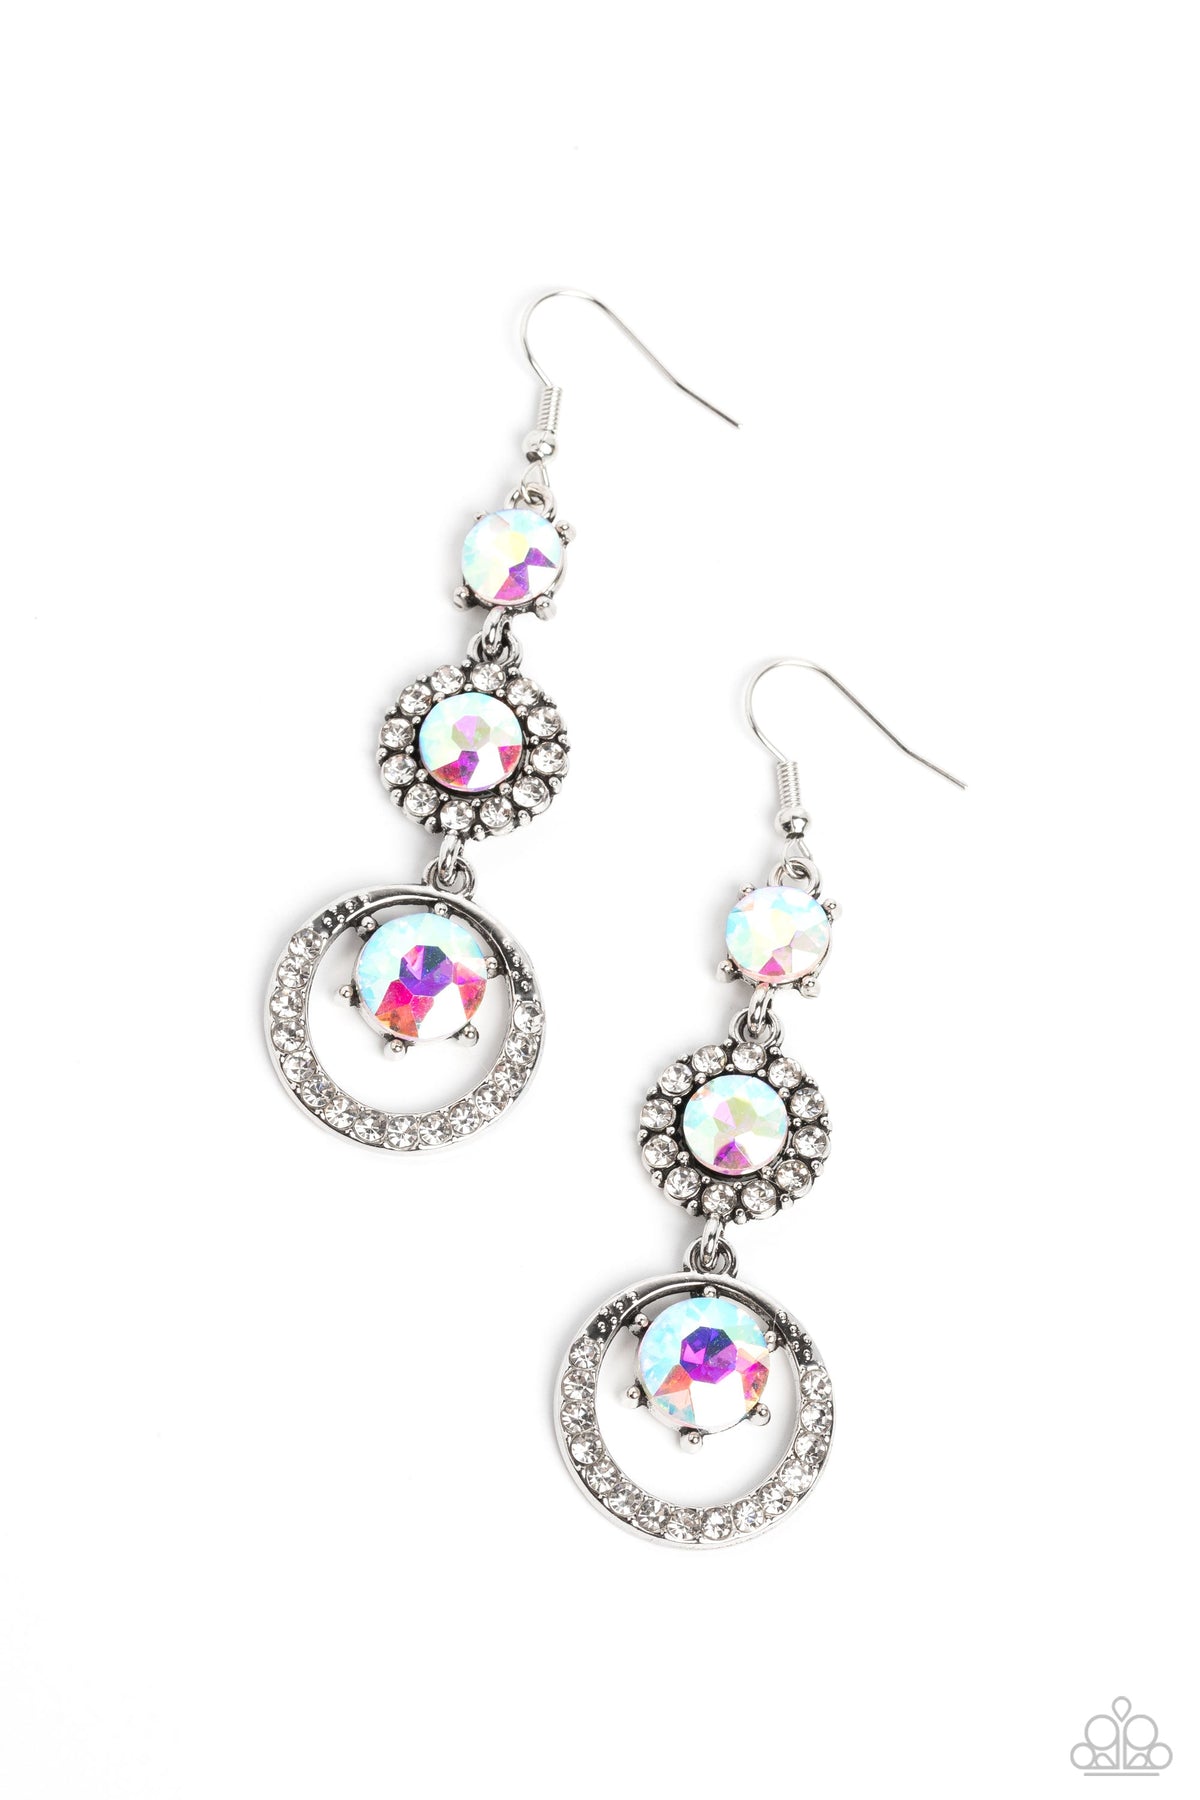 Enchanting Effulgence Multi Iridescent Rhinestone Earrings - Paparazzi Accessories- lightbox - CarasShop.com - $5 Jewelry by Cara Jewels